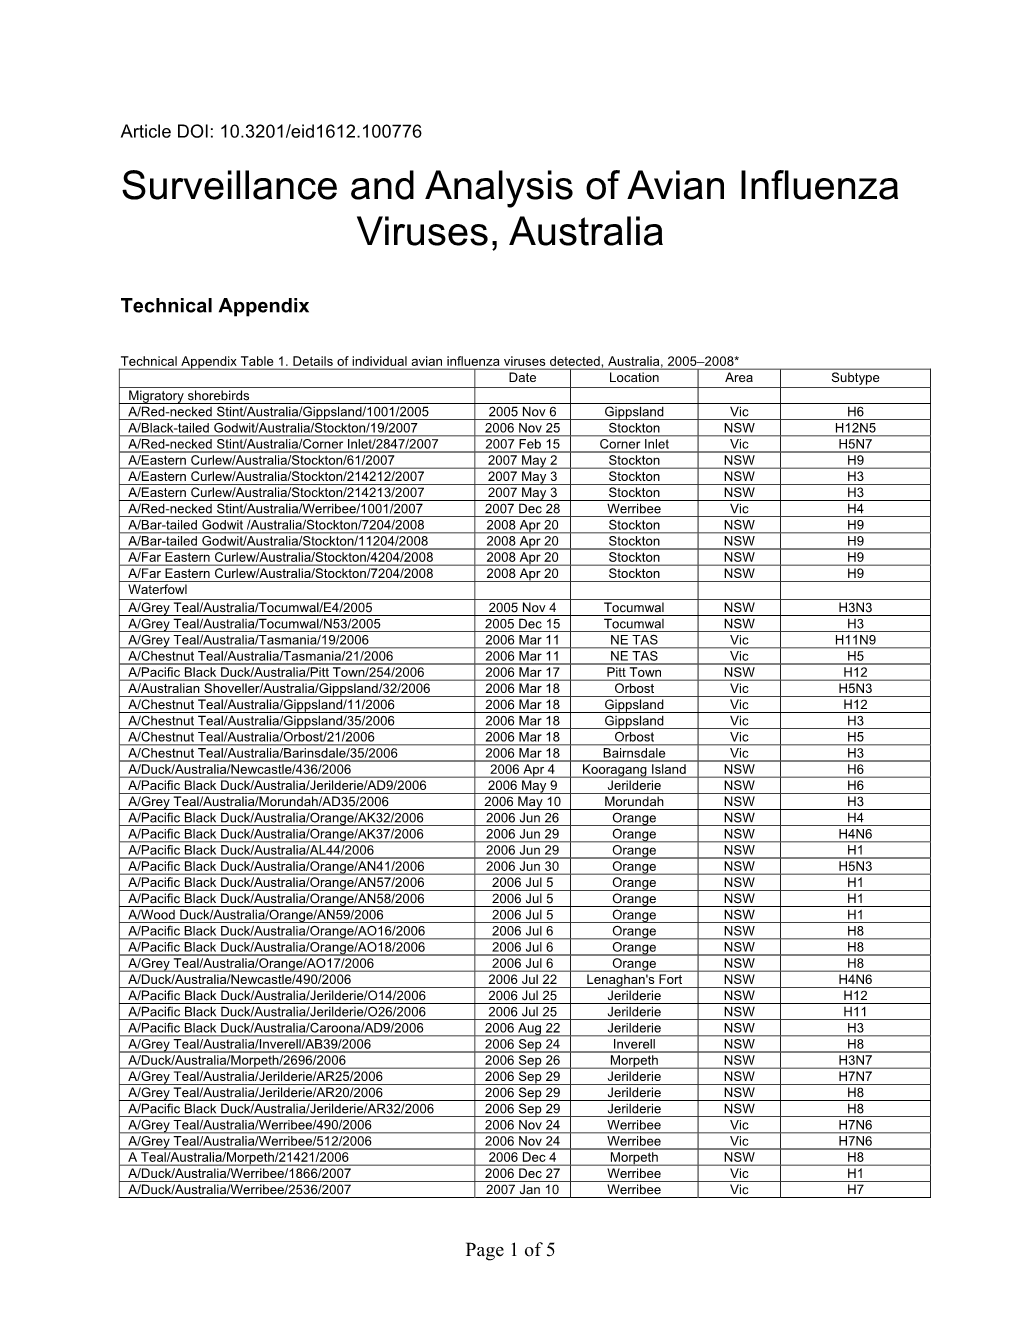 Surveillance and Analysis of Avian Influenza Viruses, Australia